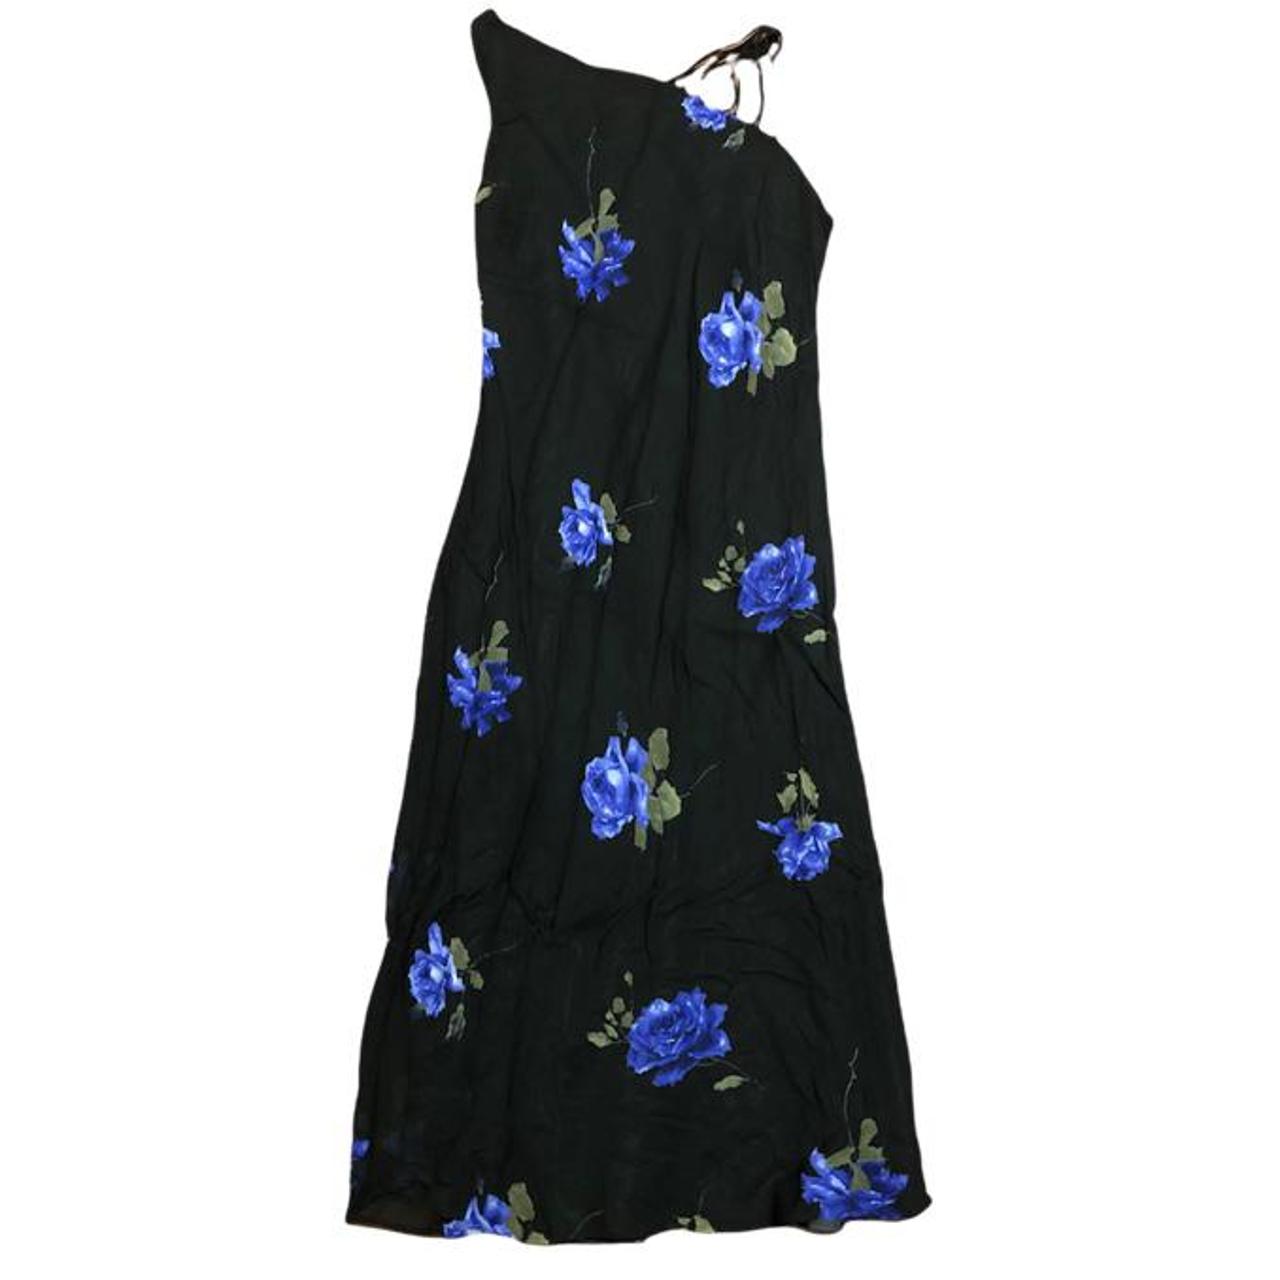 Blue Roses Women's Black and Blue Dress